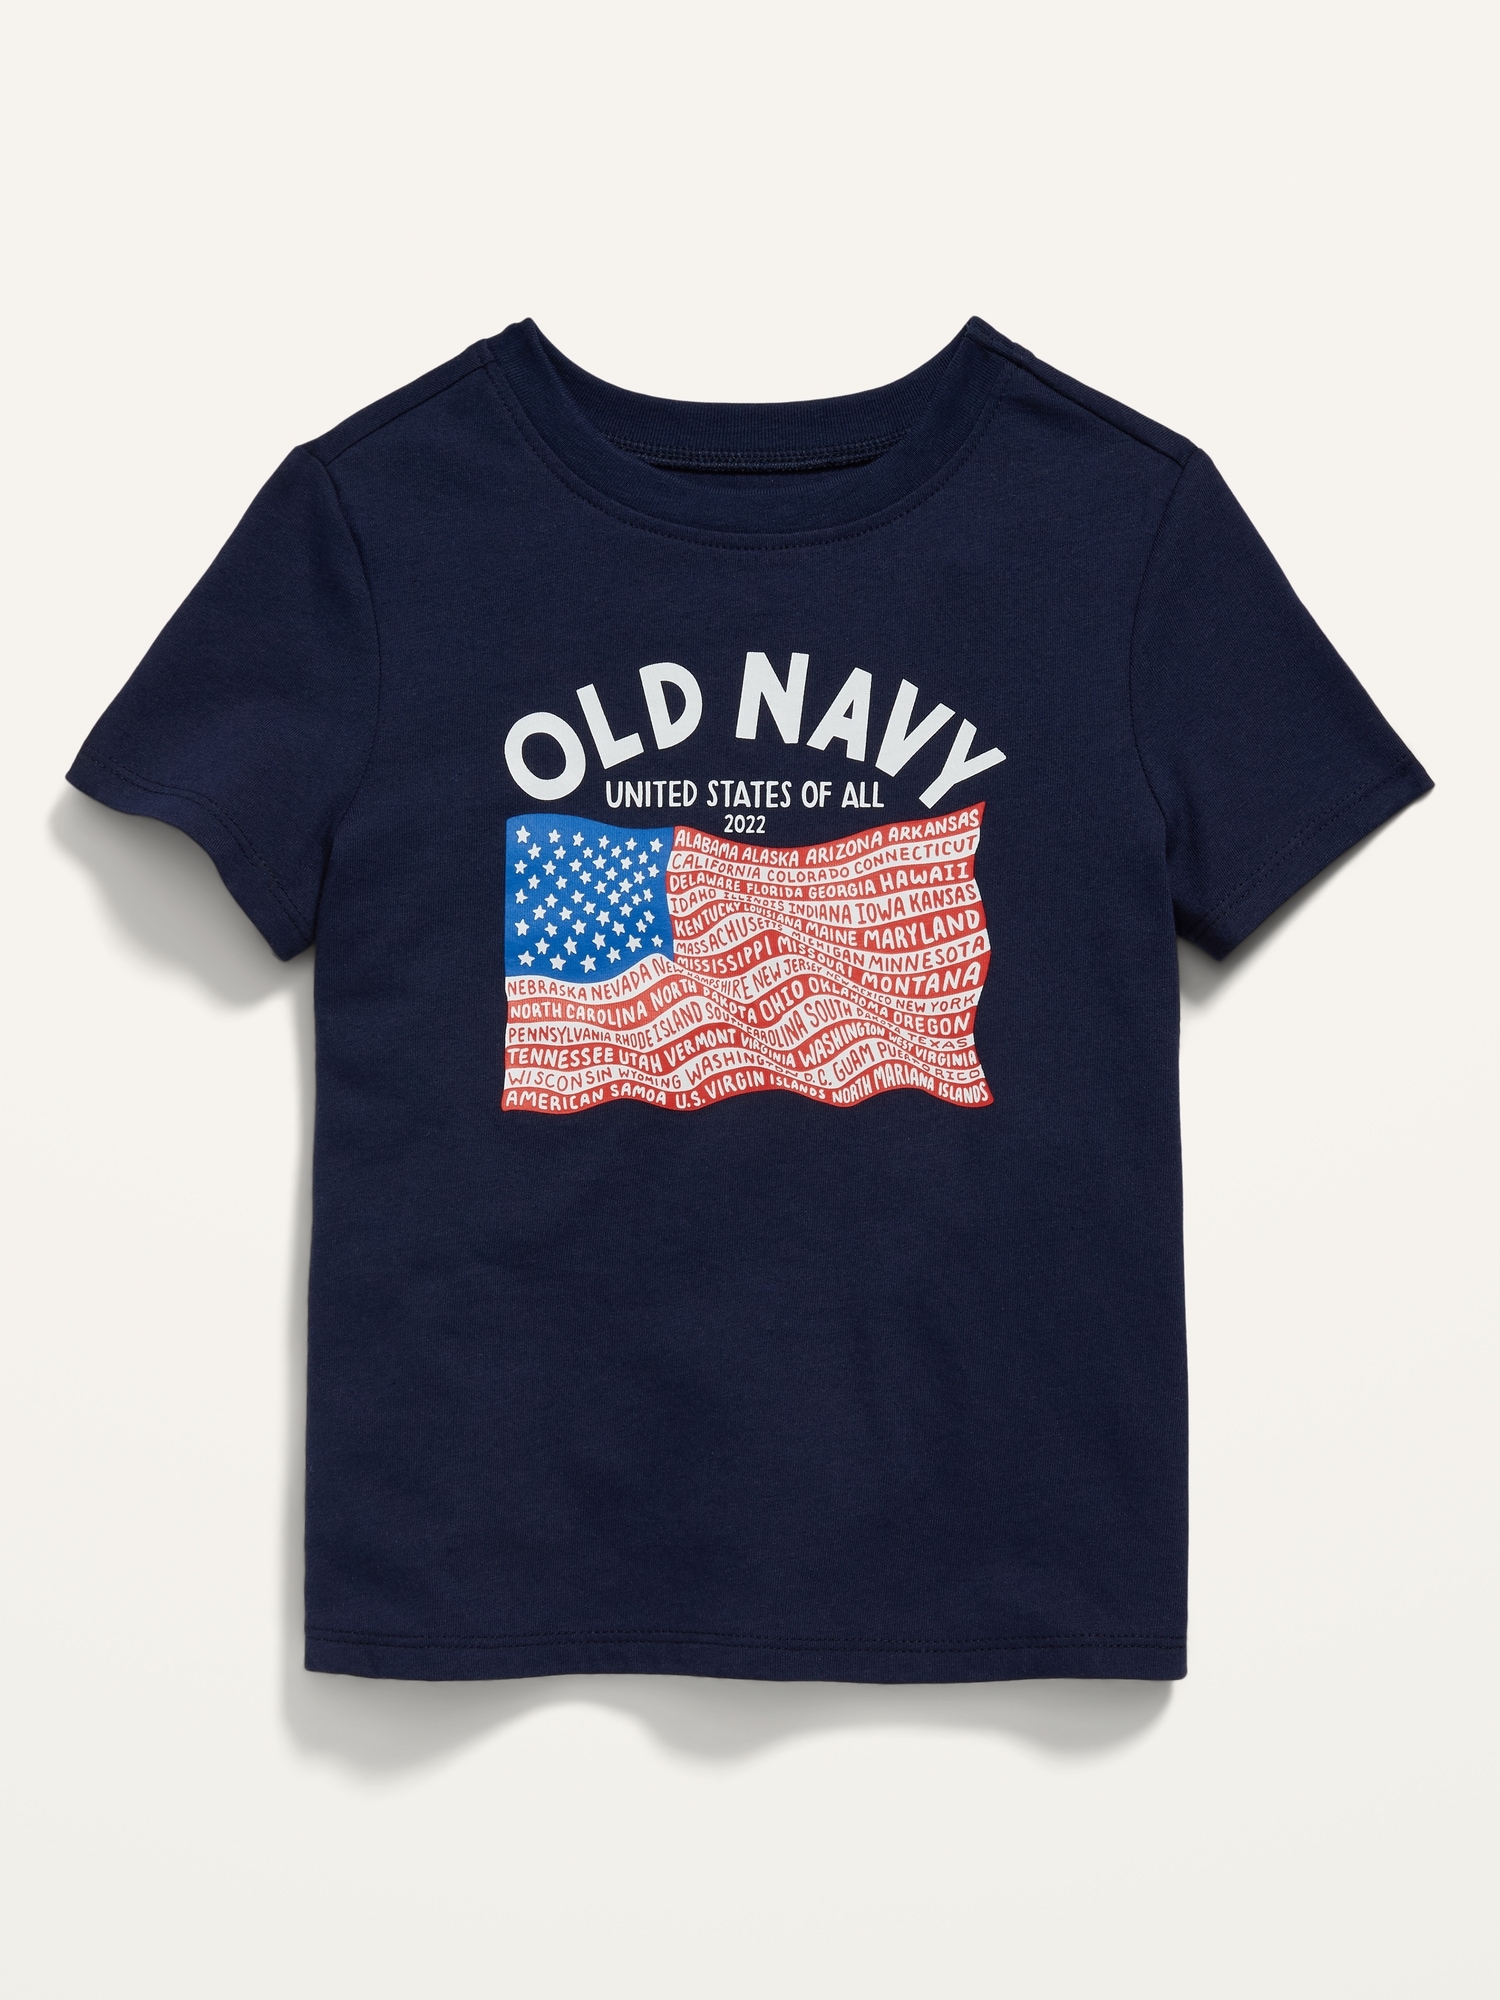 NWT BABY GAP BOYS T-SHIRT TOP LOGO navy 4th July flag  USA    u pick size 